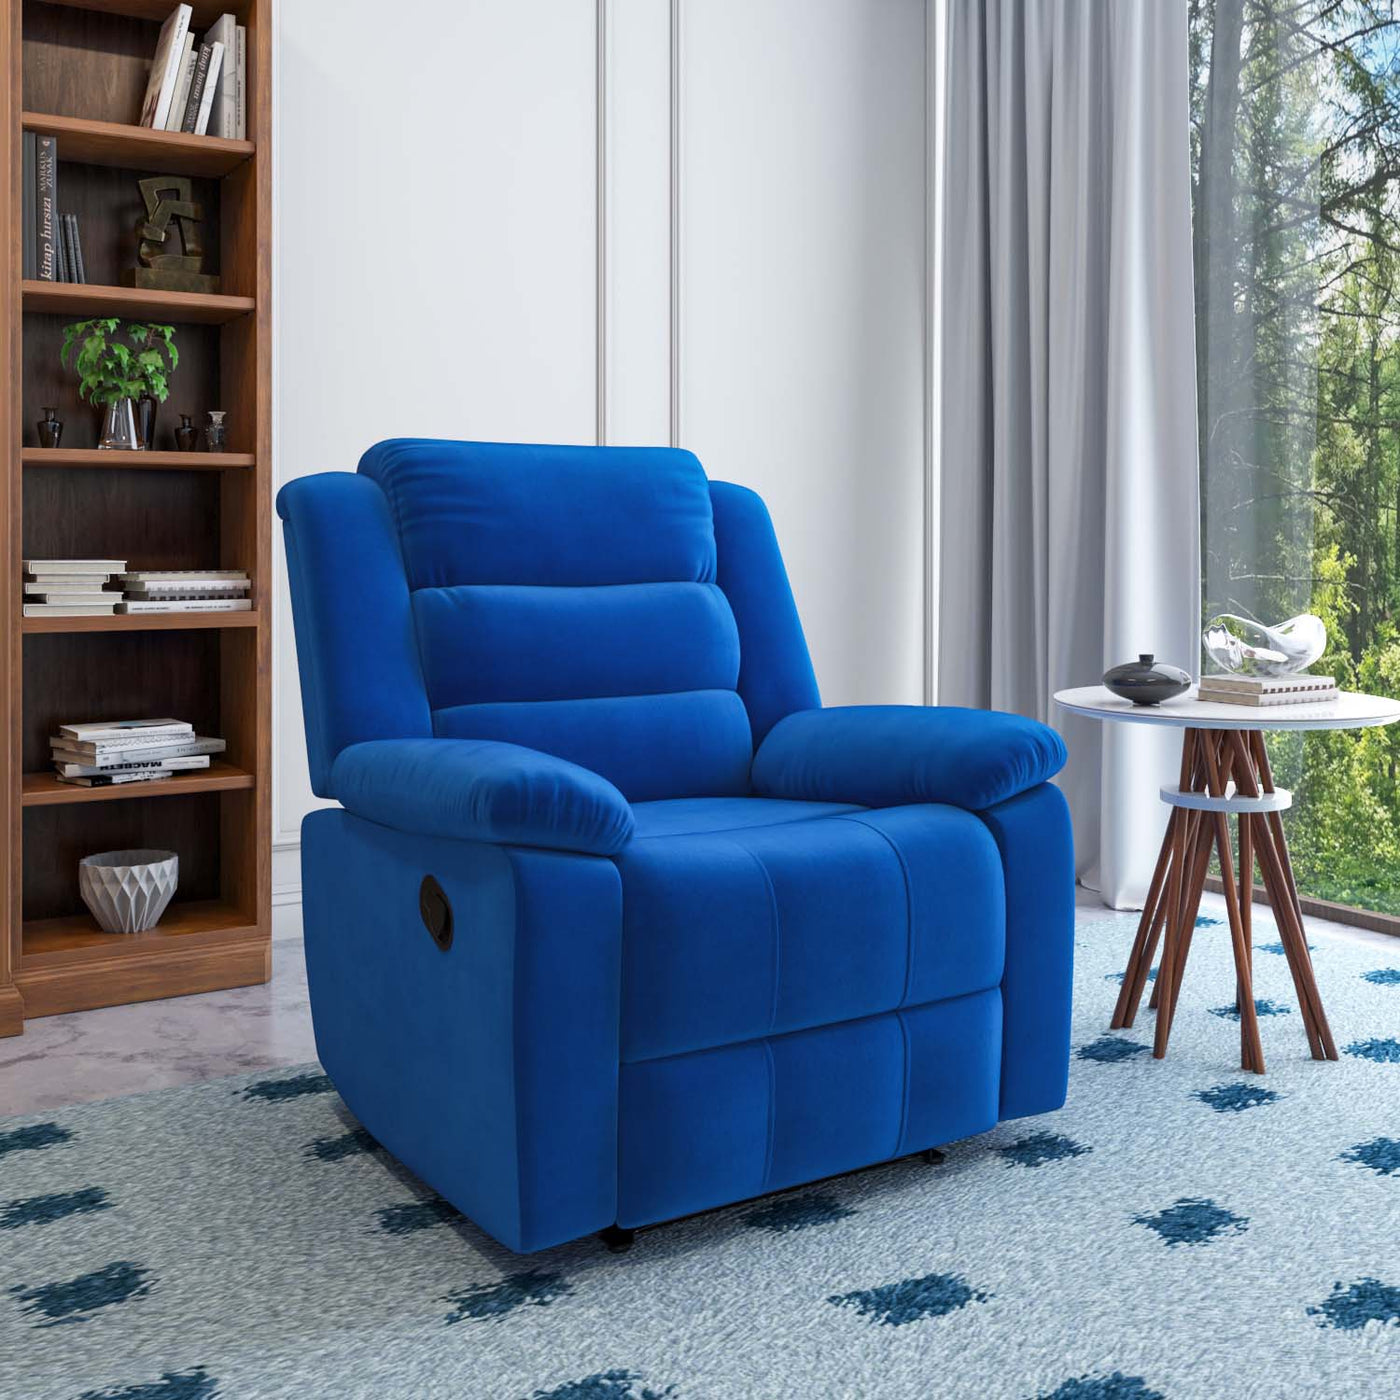 Nilkamal Sierra 1 Seater Manual Recliner Sofa (Blue)